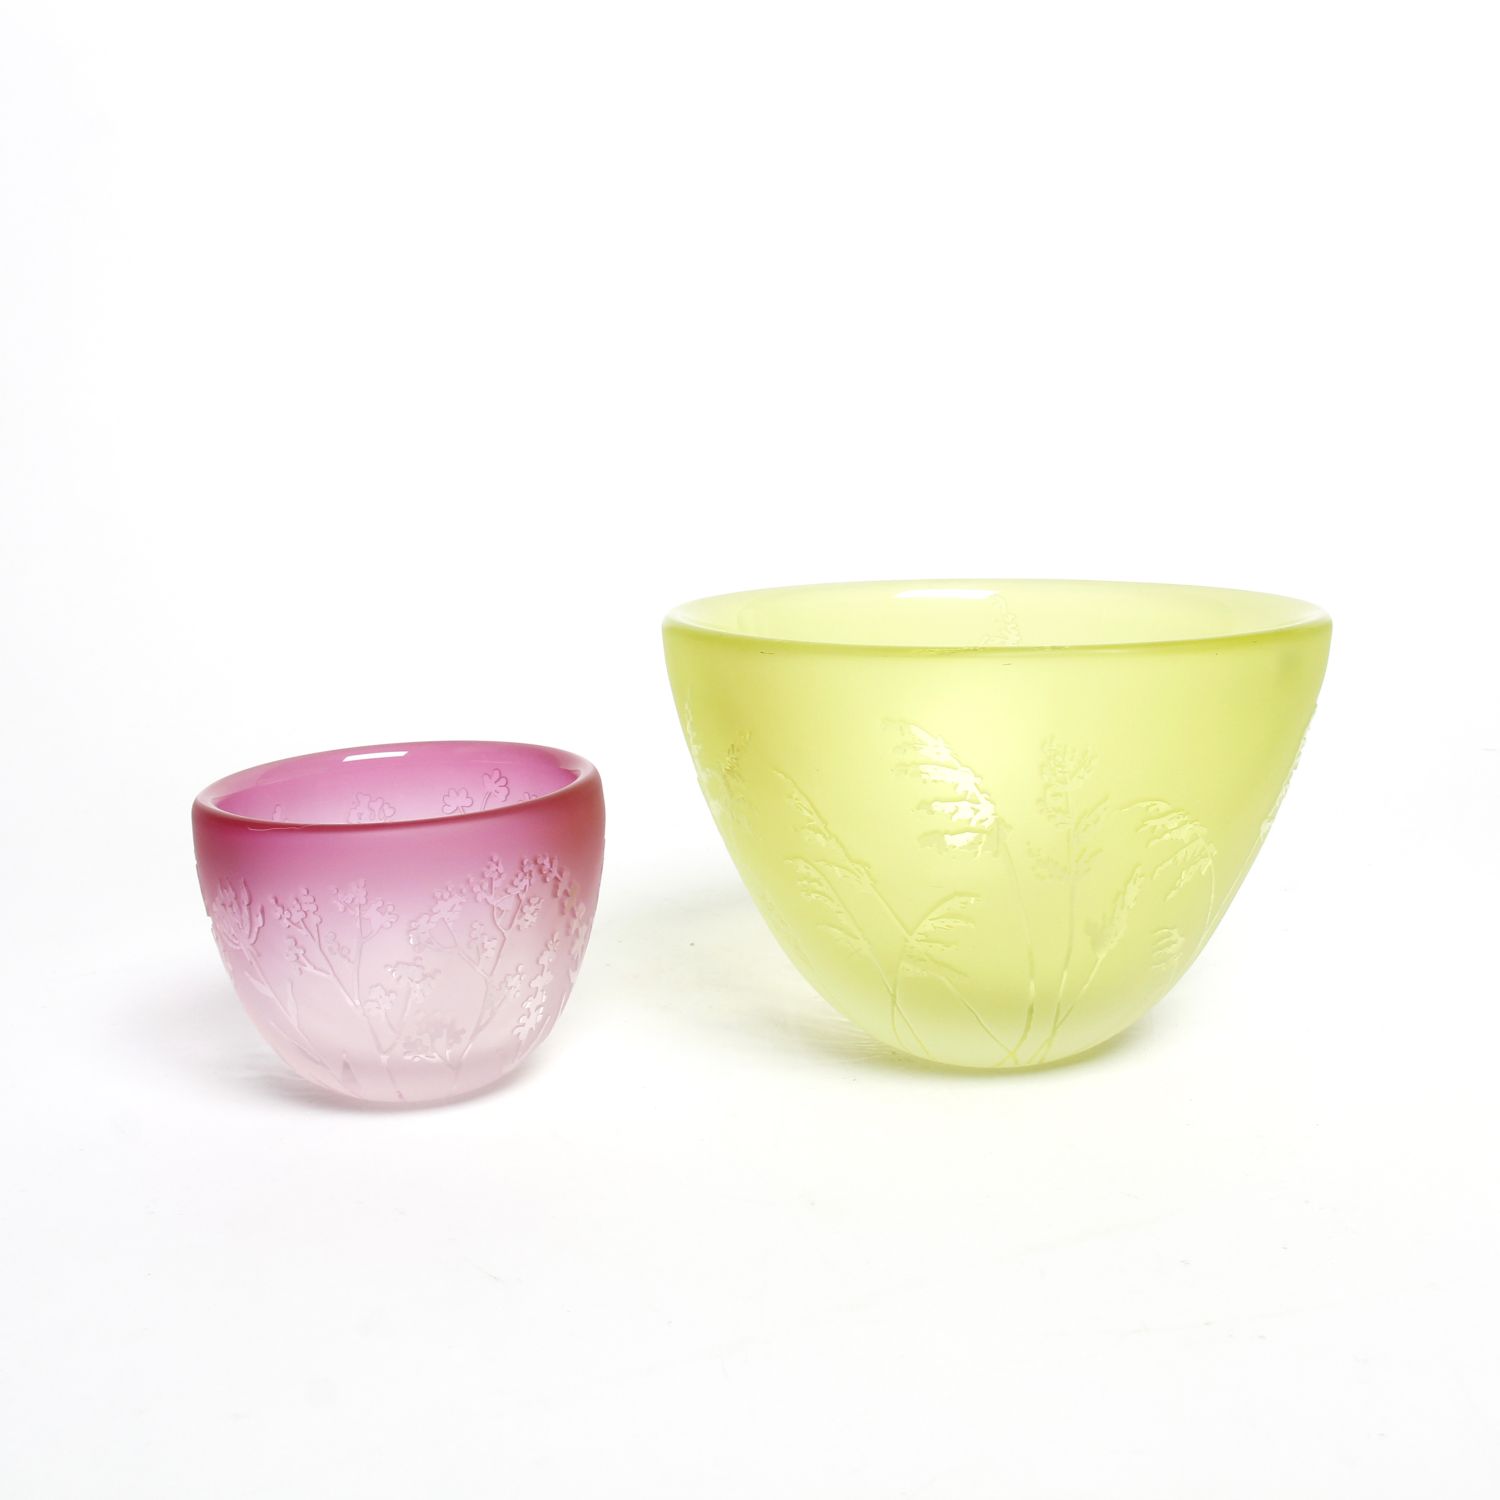 Carol Nesbitt: Big Green Bowl Glass Product Image 2 of 2